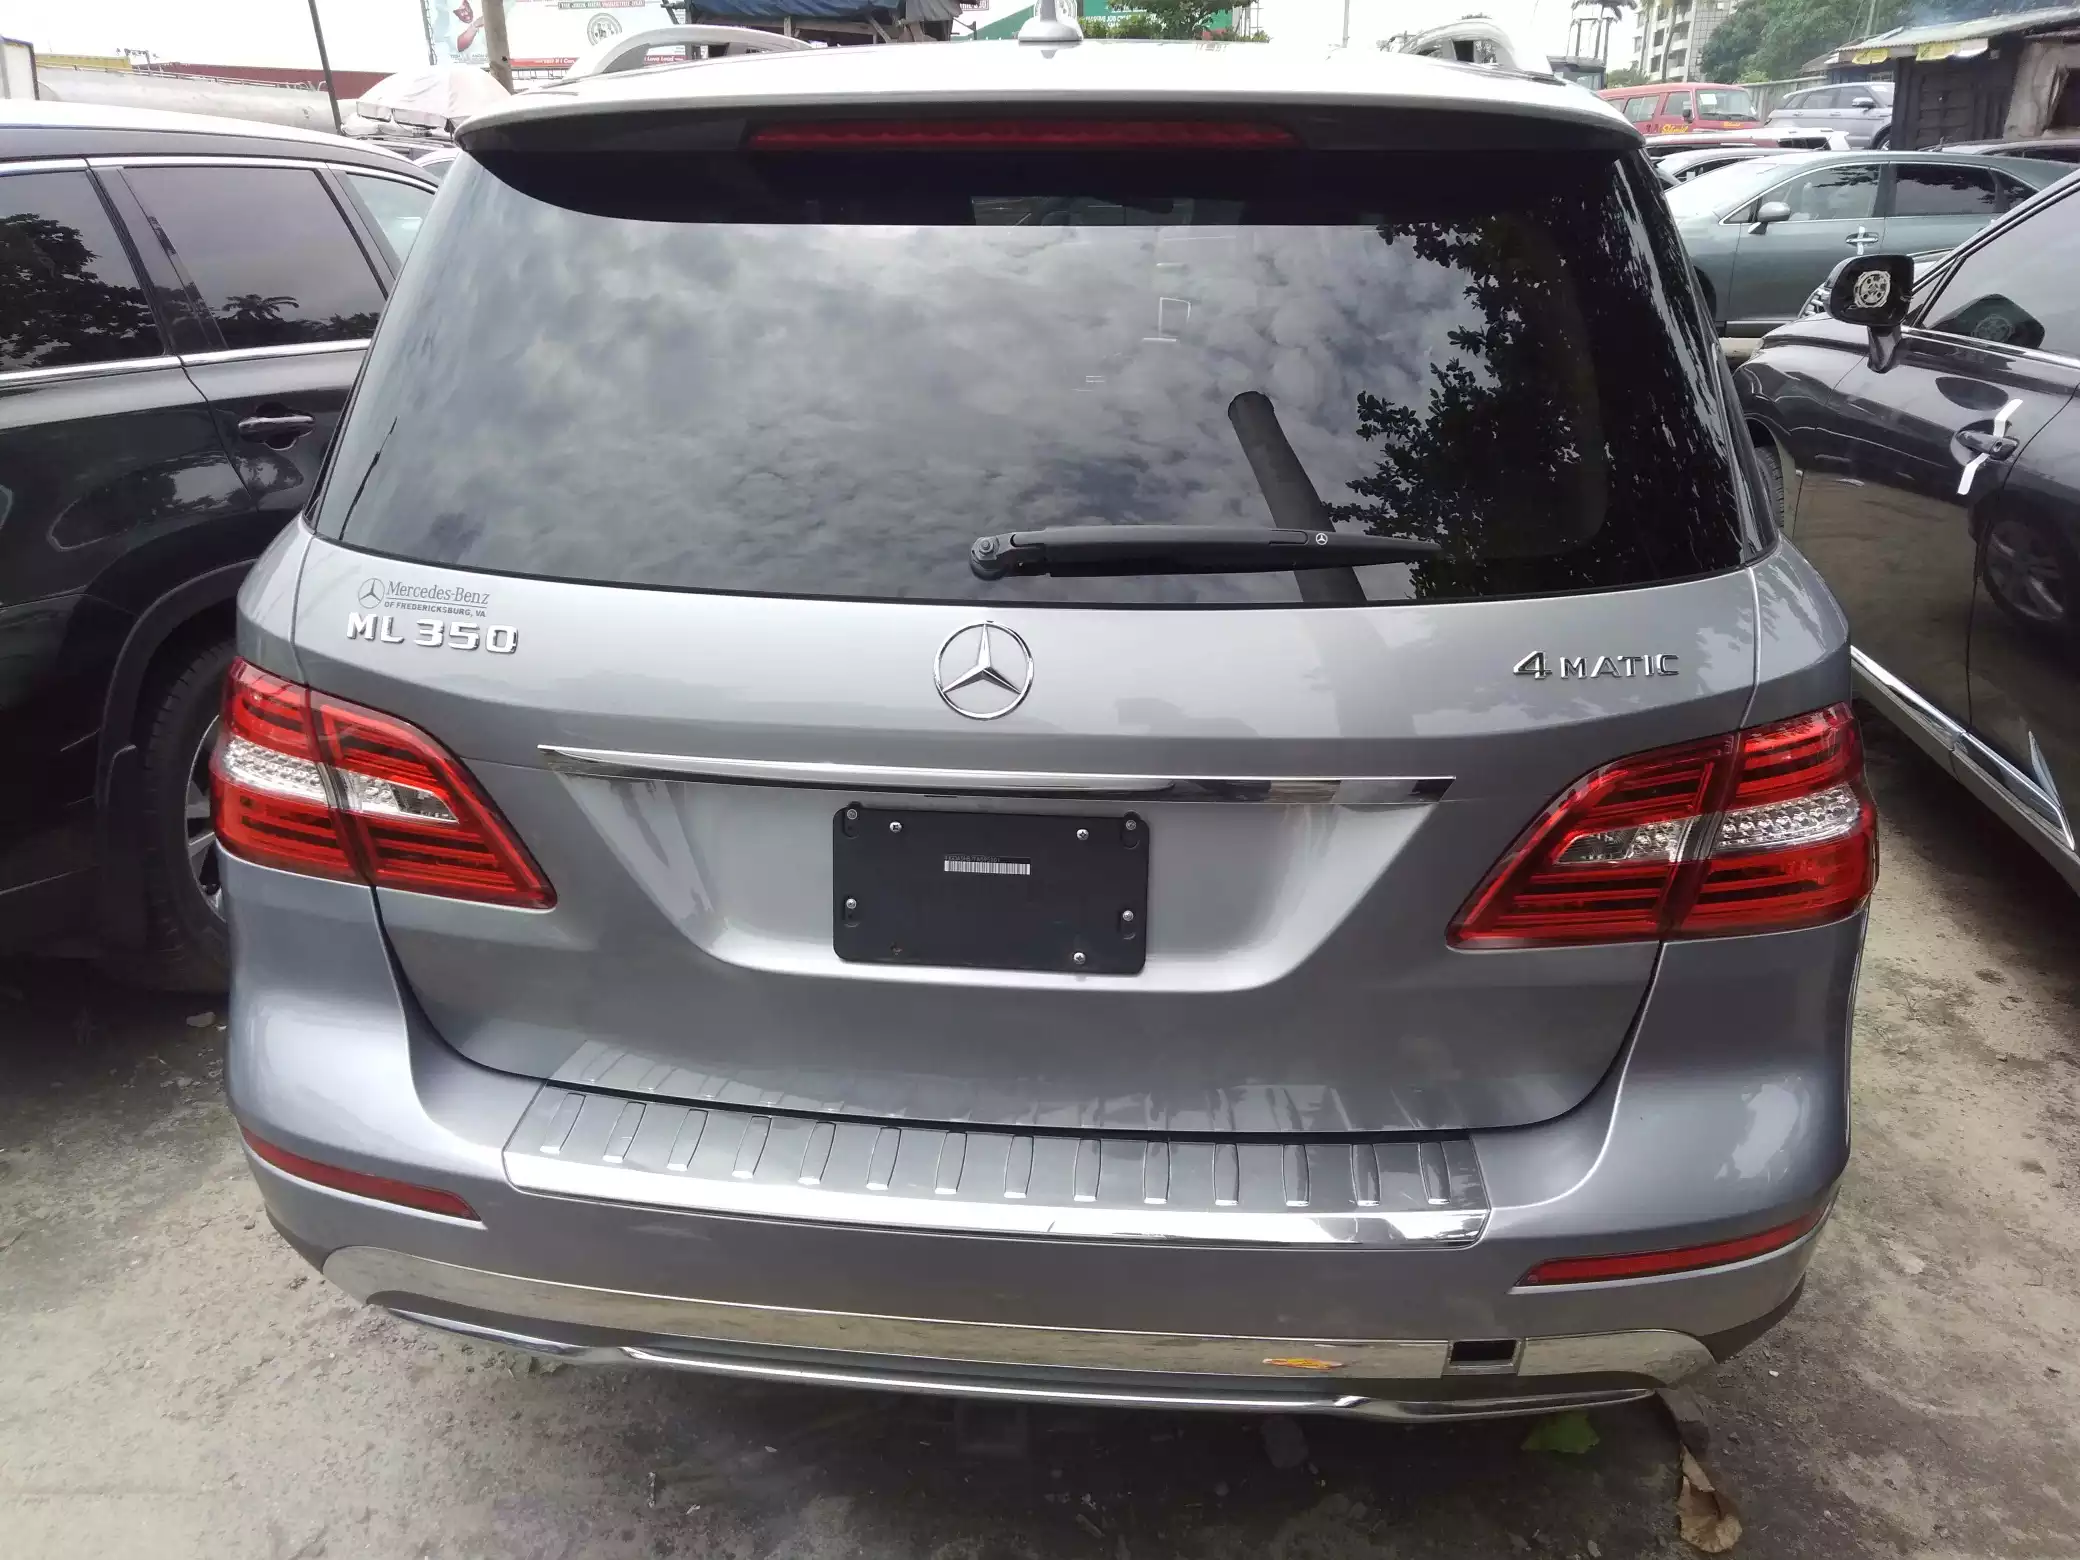 Mercedes-Benz ML 350 2015 Price, Features, Images  Specs